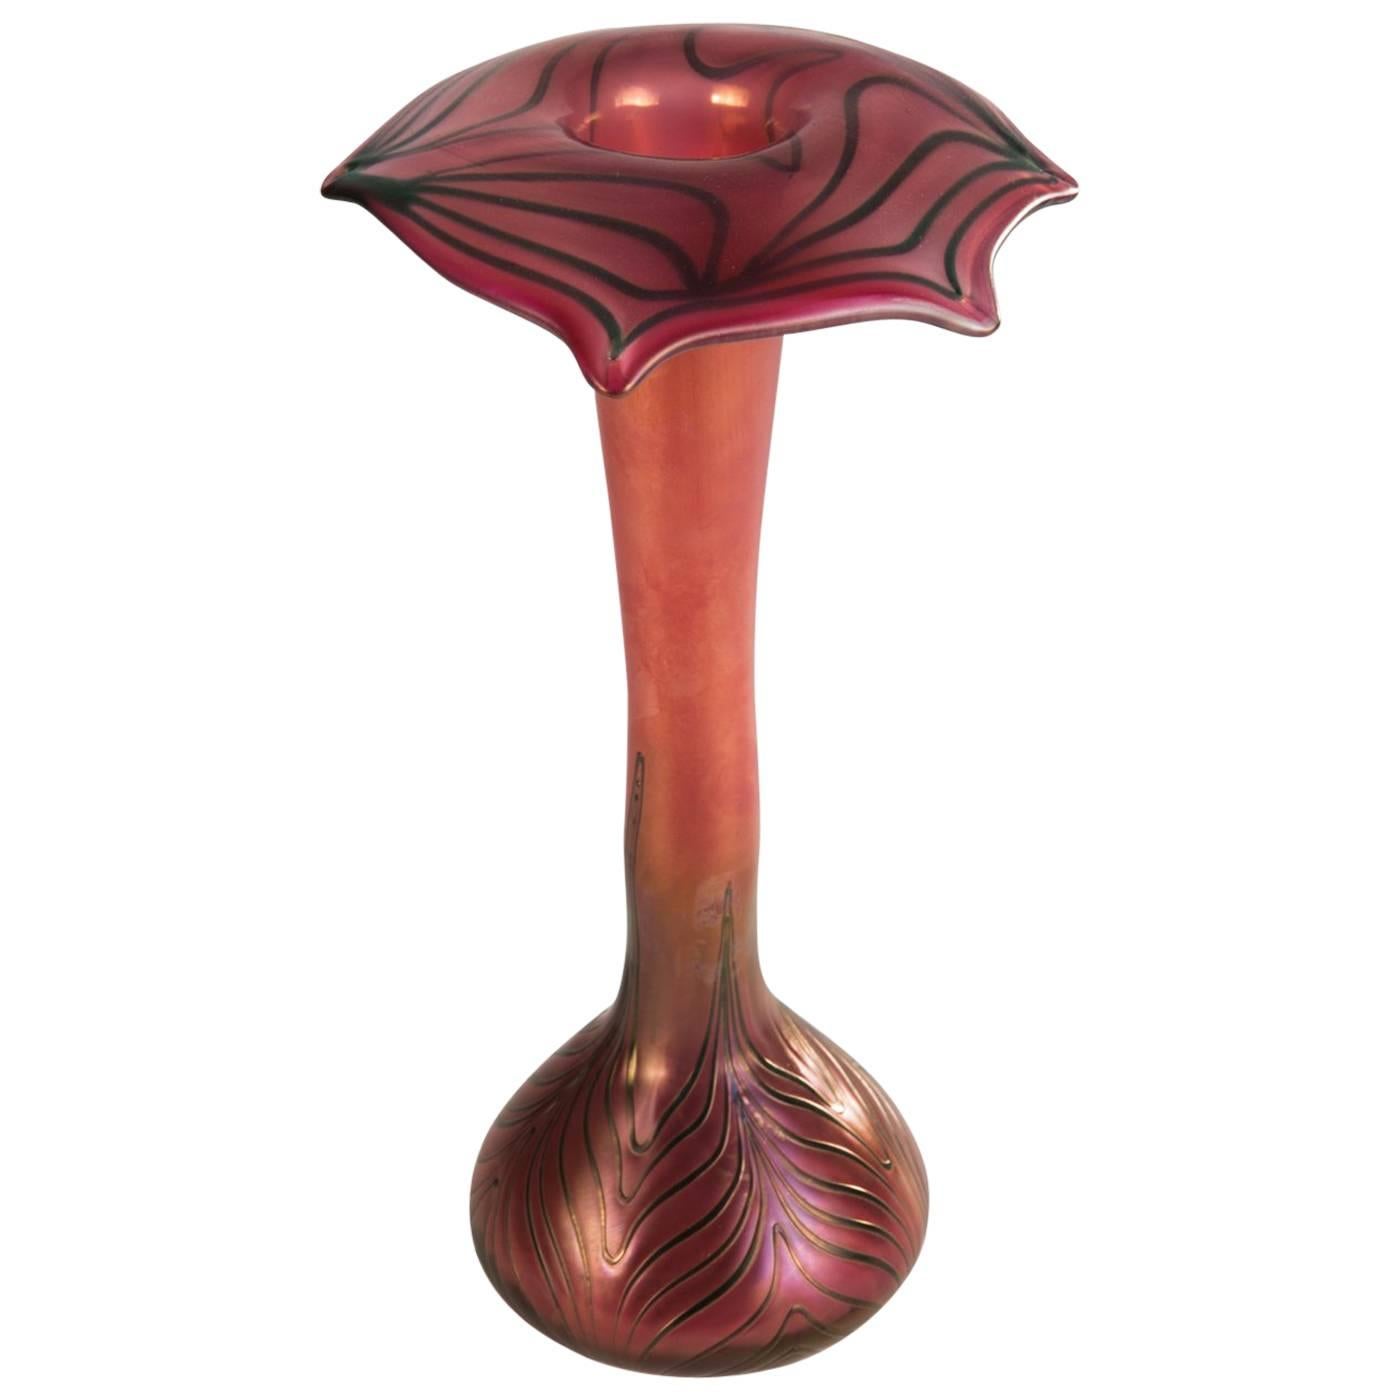 Art Nouveau Bohemian Glass Vase with Spiral Melting by Kralik For Sale